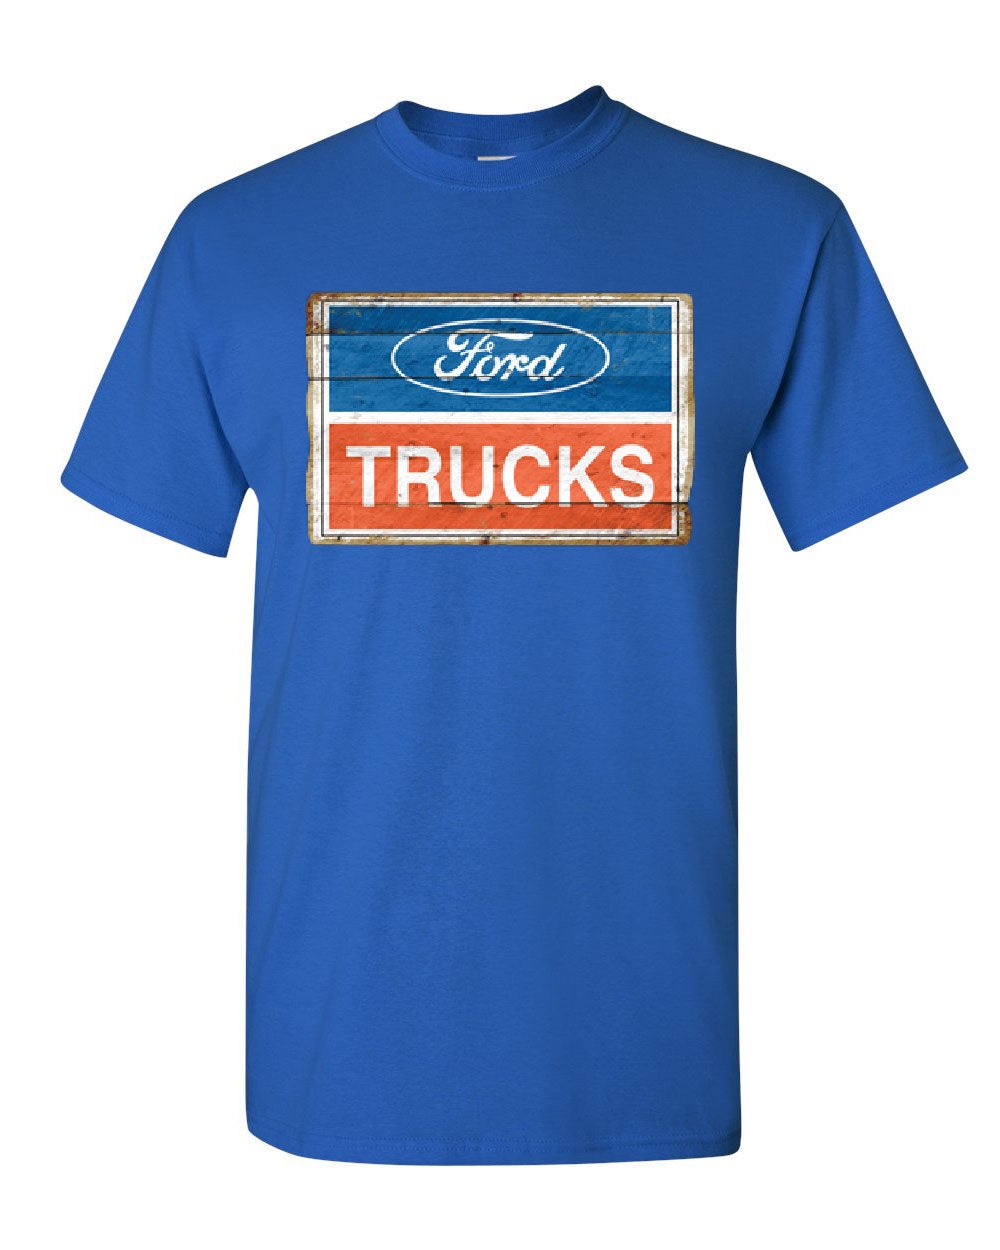 Ford Trucks Old Sign T-Shirt Licensed Ford Built Tough Tee Shirt | eBay